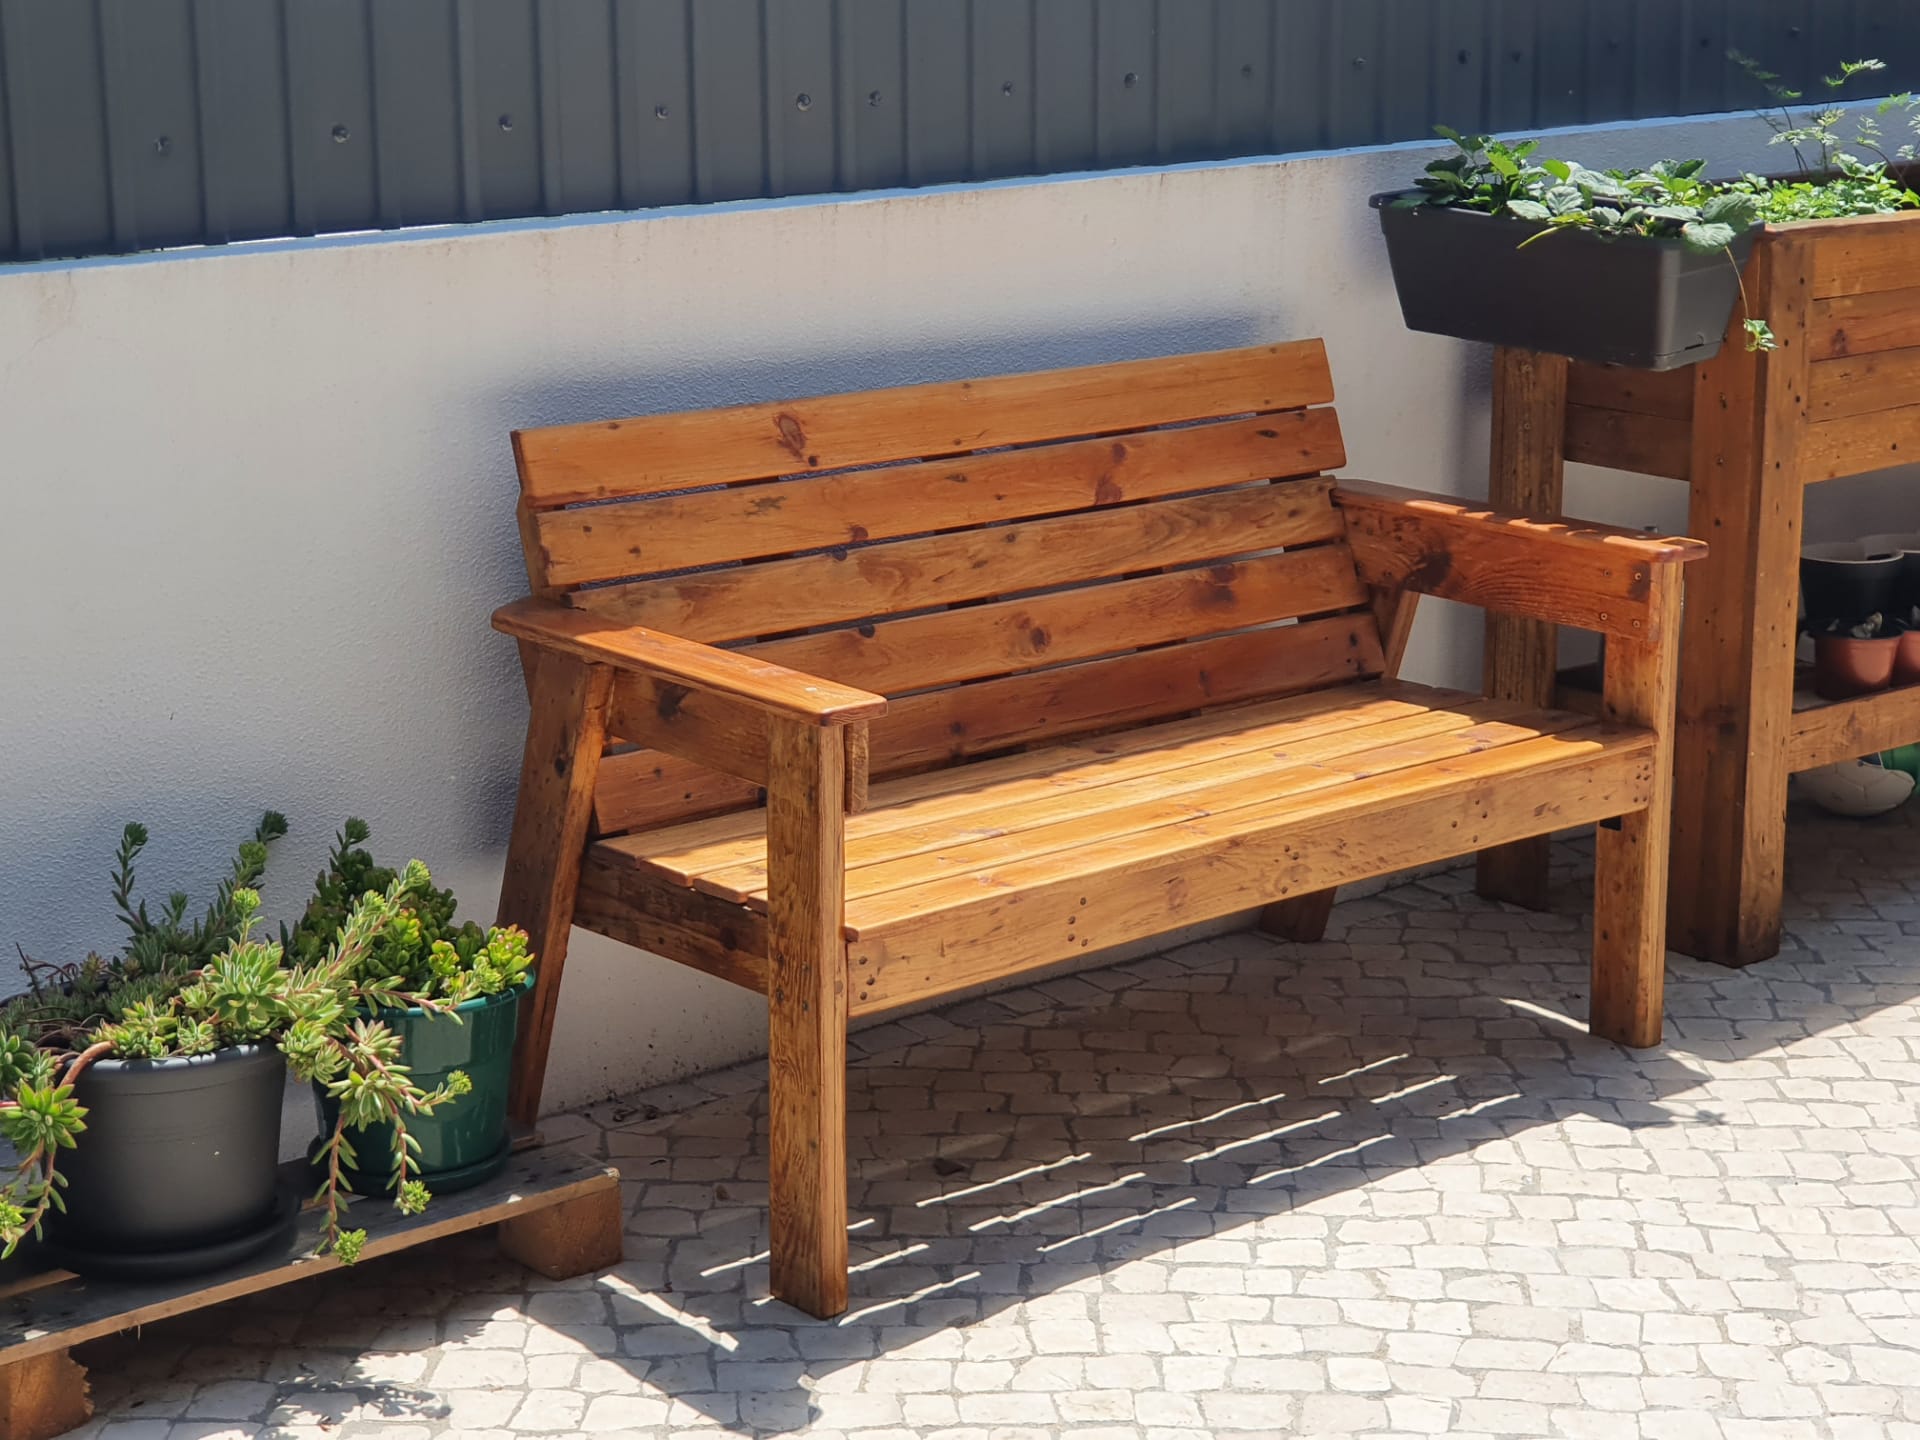 2x4 Garden Bench Howtospecialist, Outdoor Bench With Backrest Diy